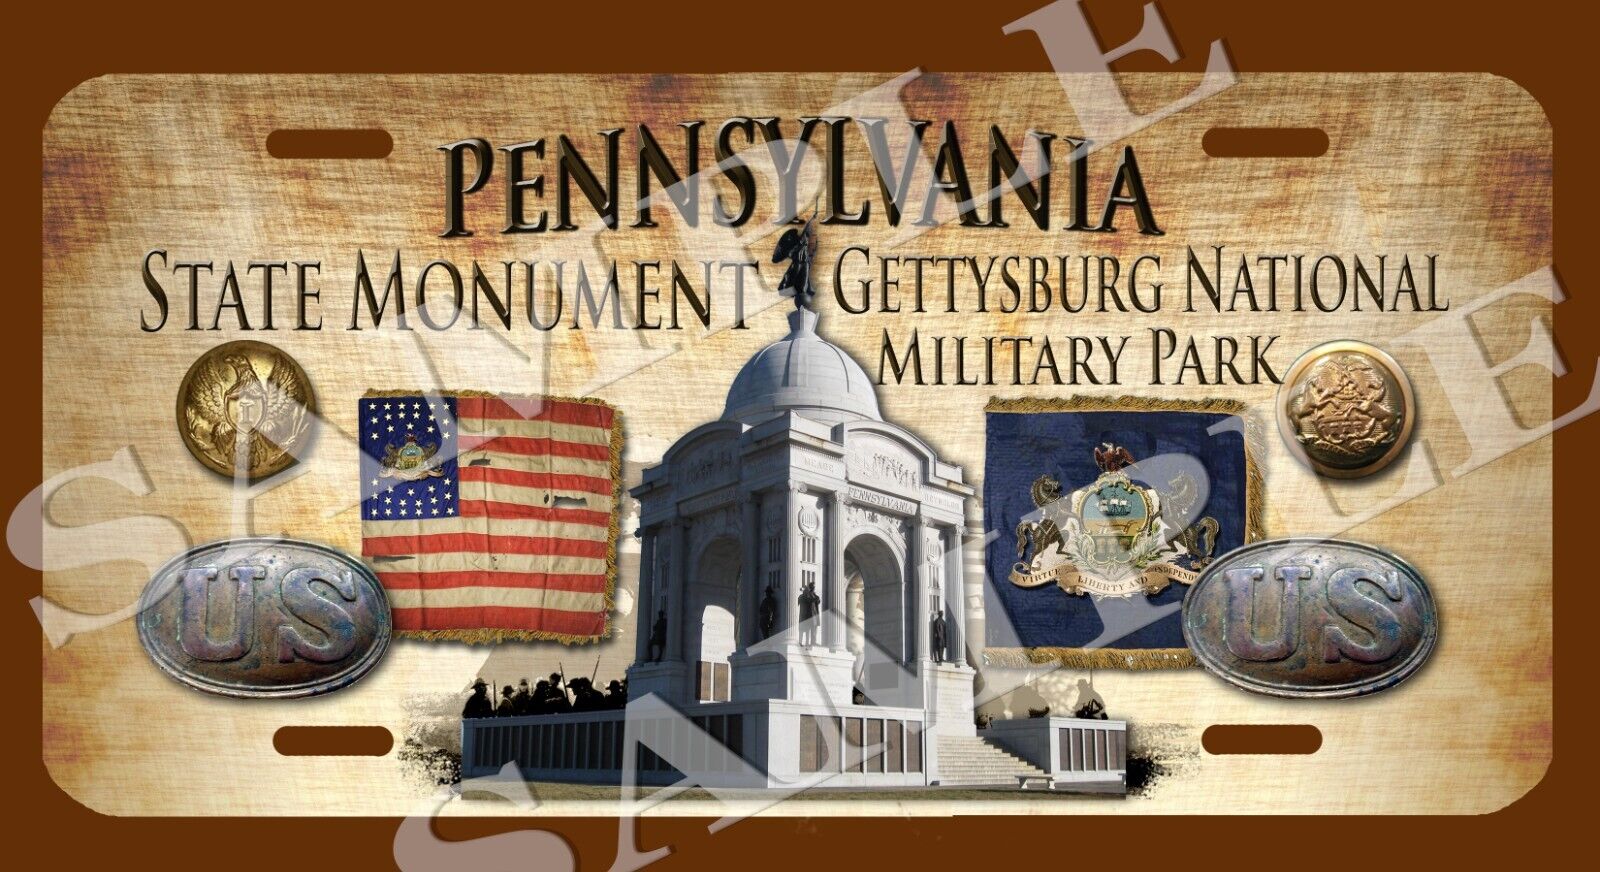 Pennsylvania State Monument Gettysburg Pa Civil War Themed vehicle license plate